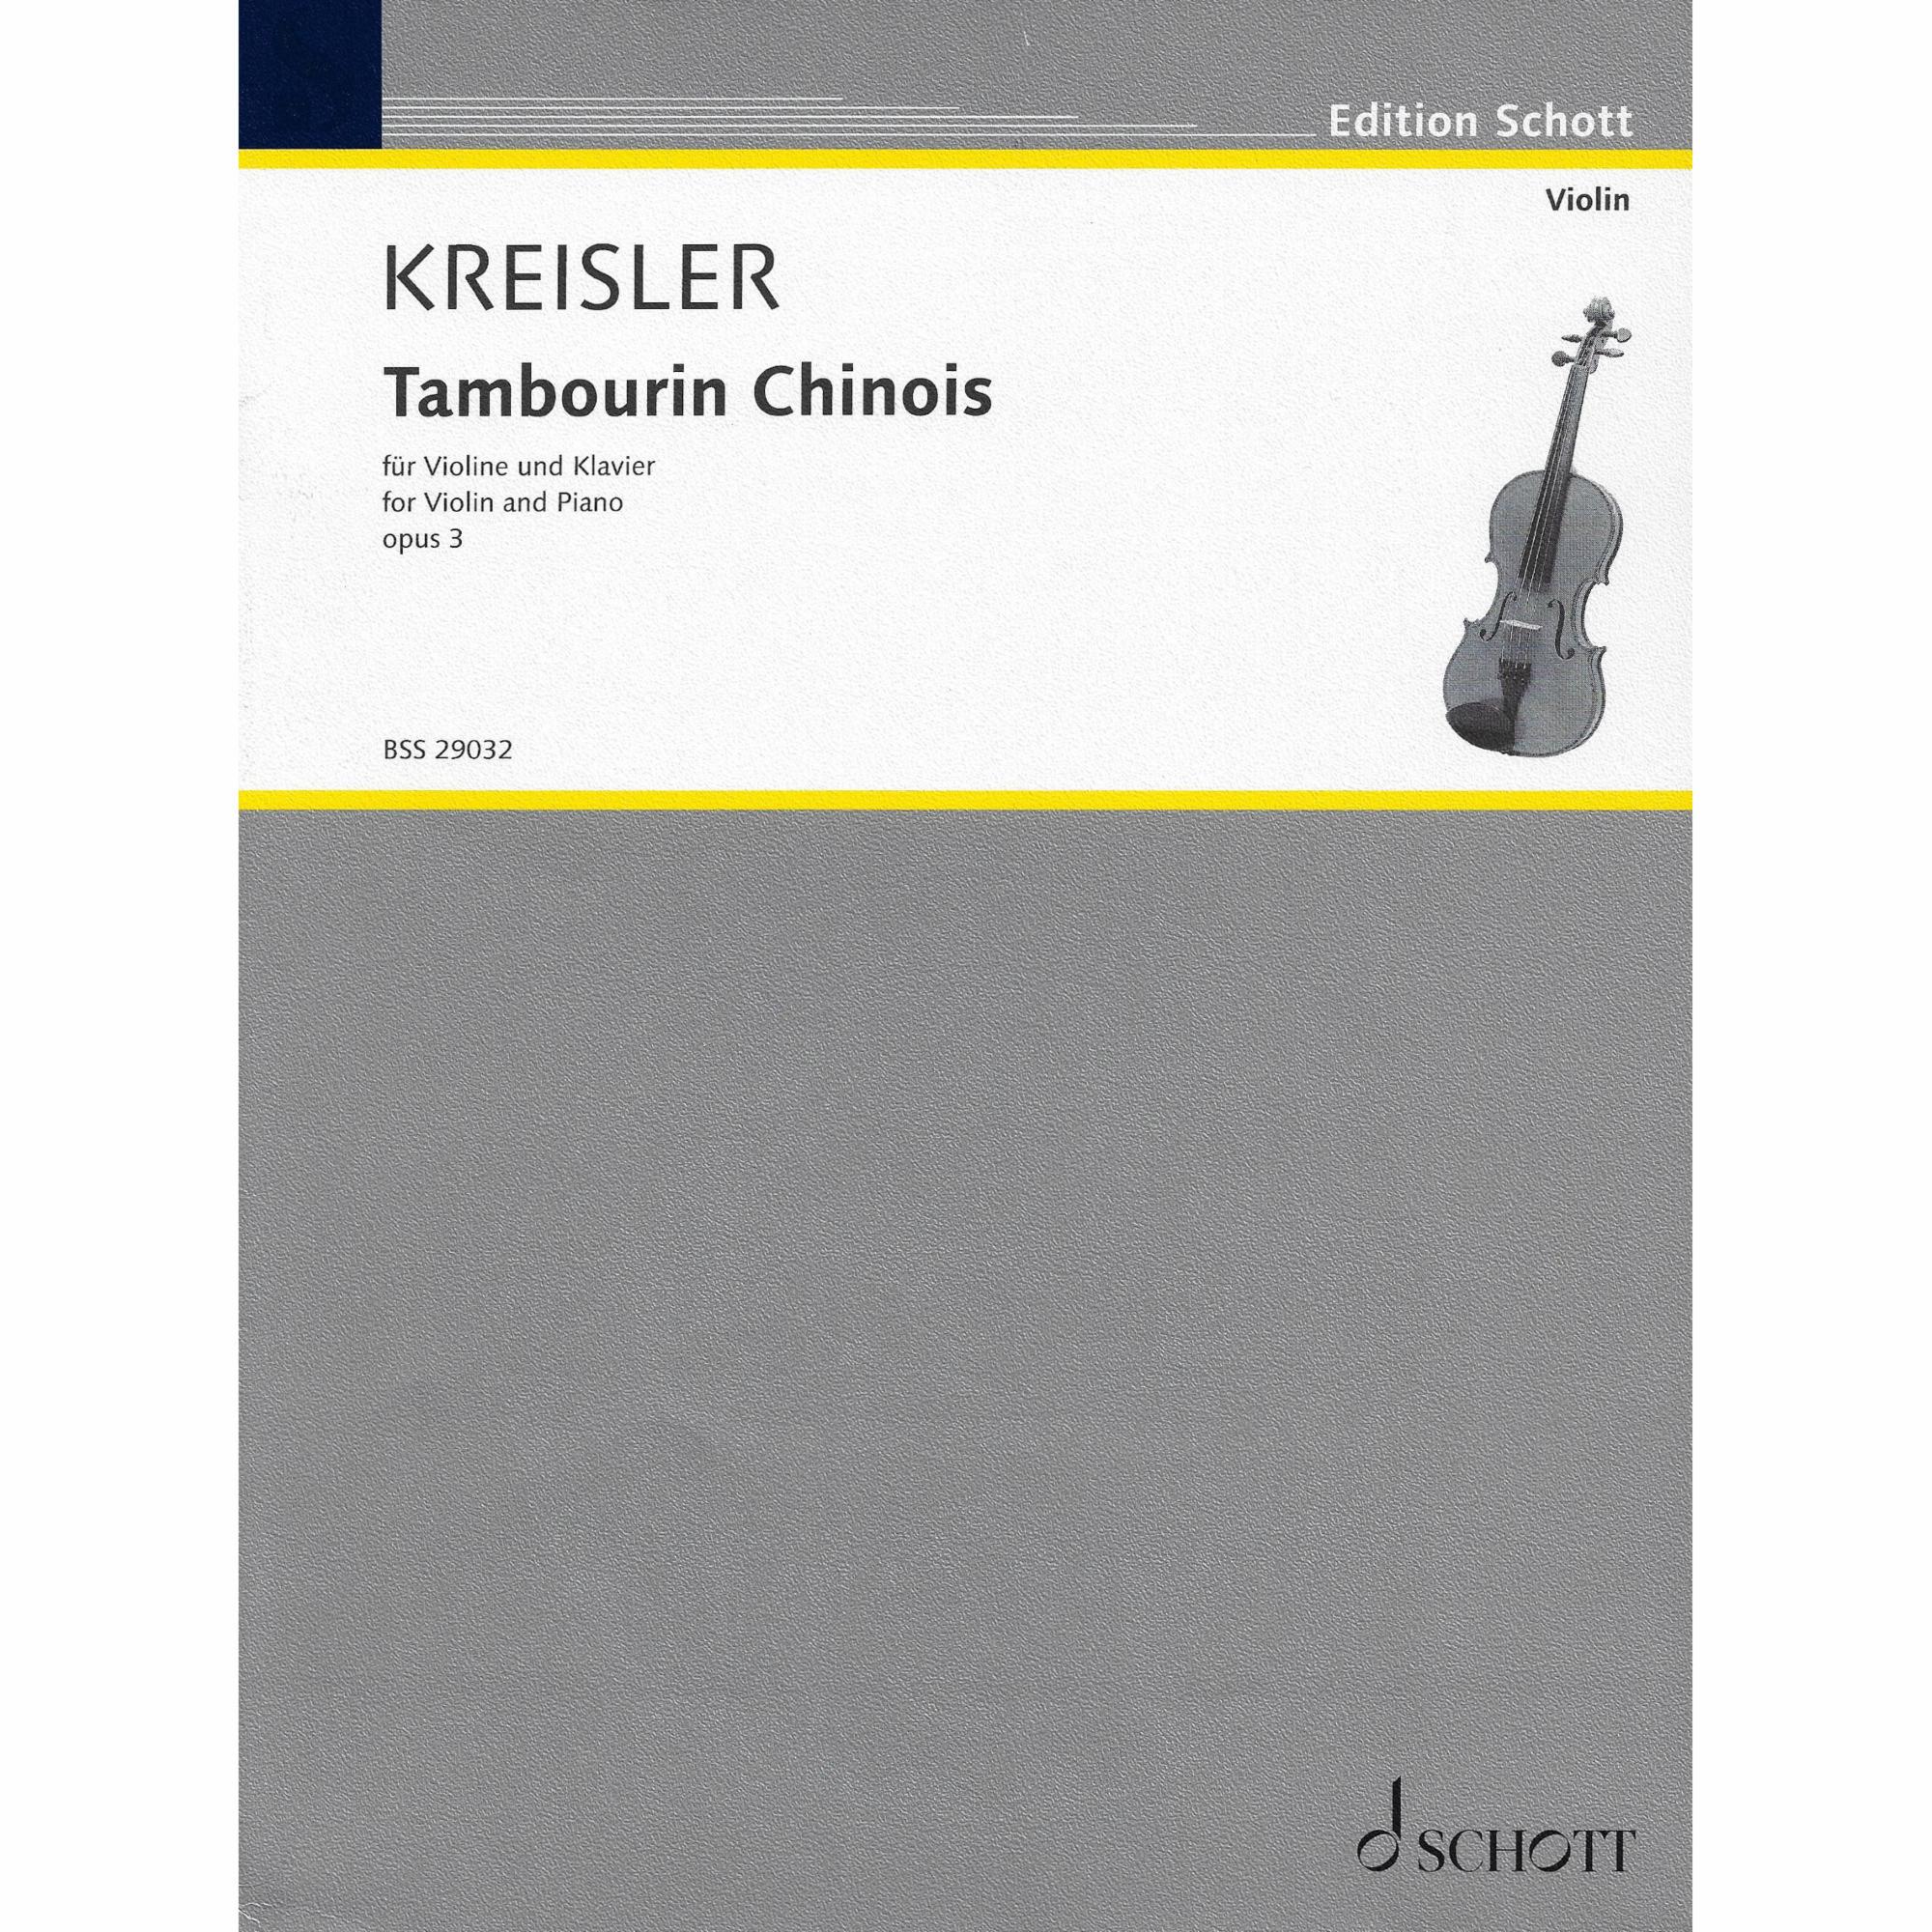 Kreisler -- Tambourin Chinois, Op. 3 for Violin and Piano